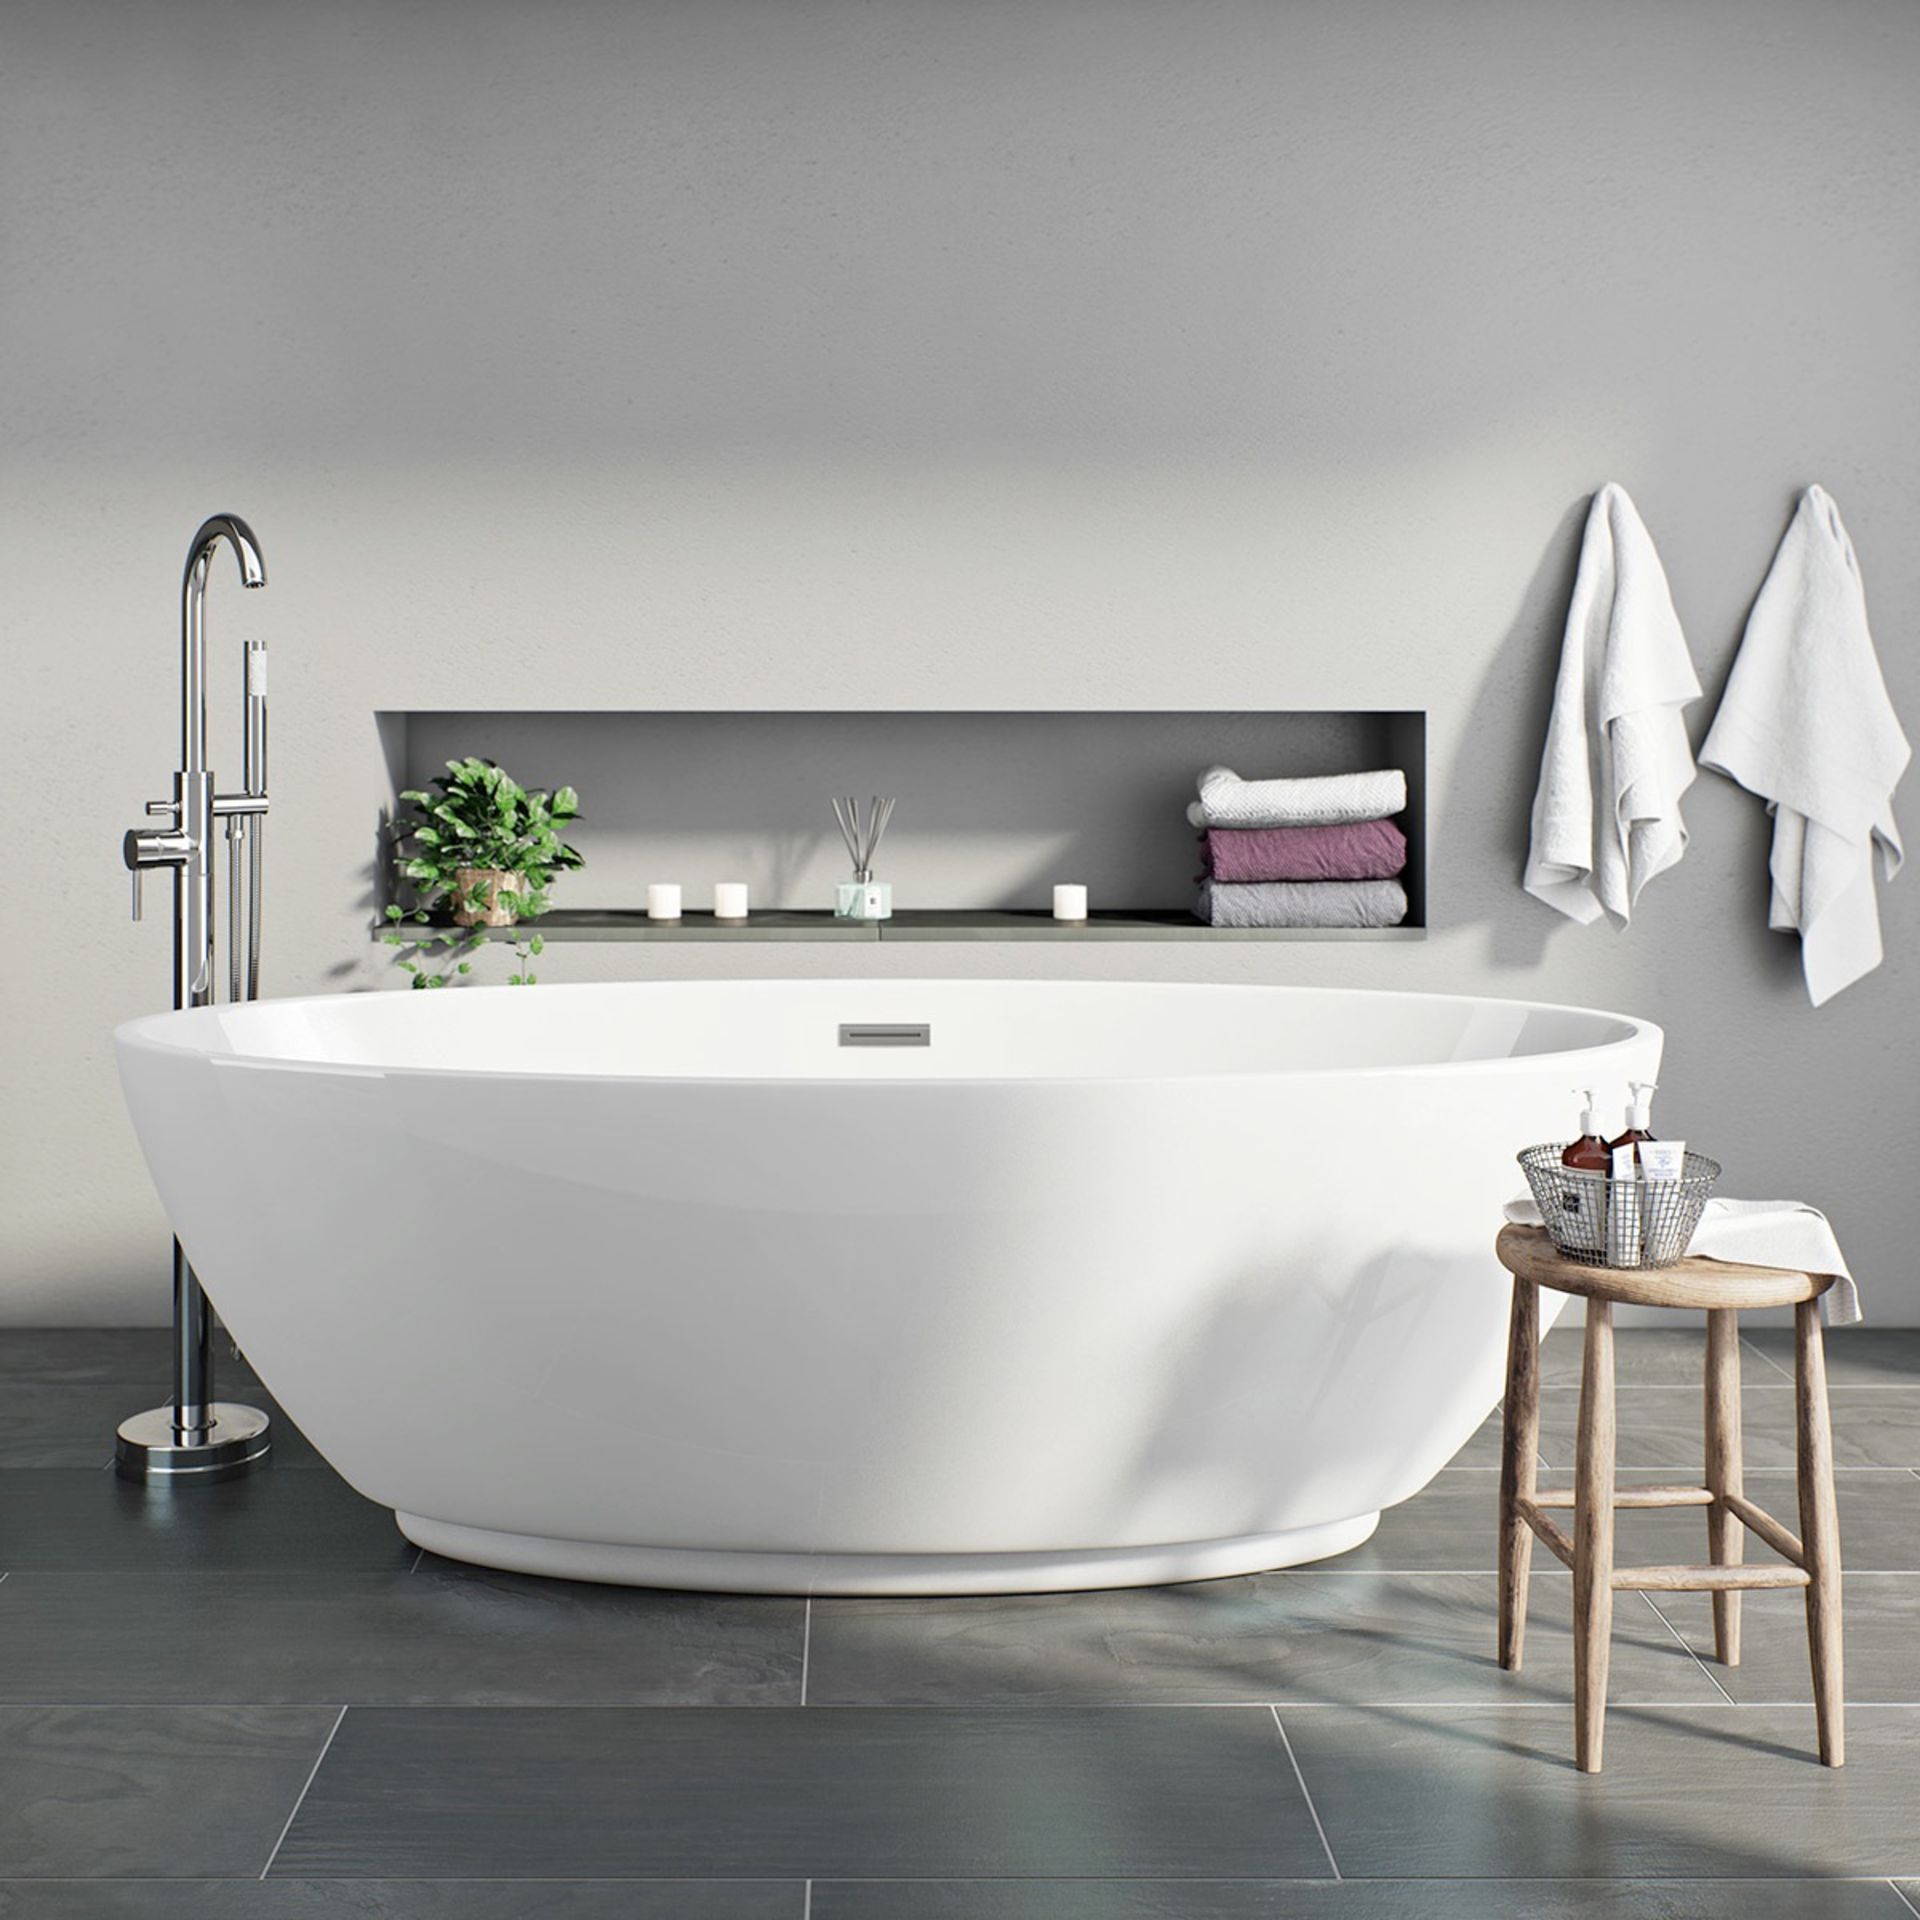 1 x Harrison Freestanding Bath 1790 x 810mm  - Unused Stock - Beautiful oval Design - Highly